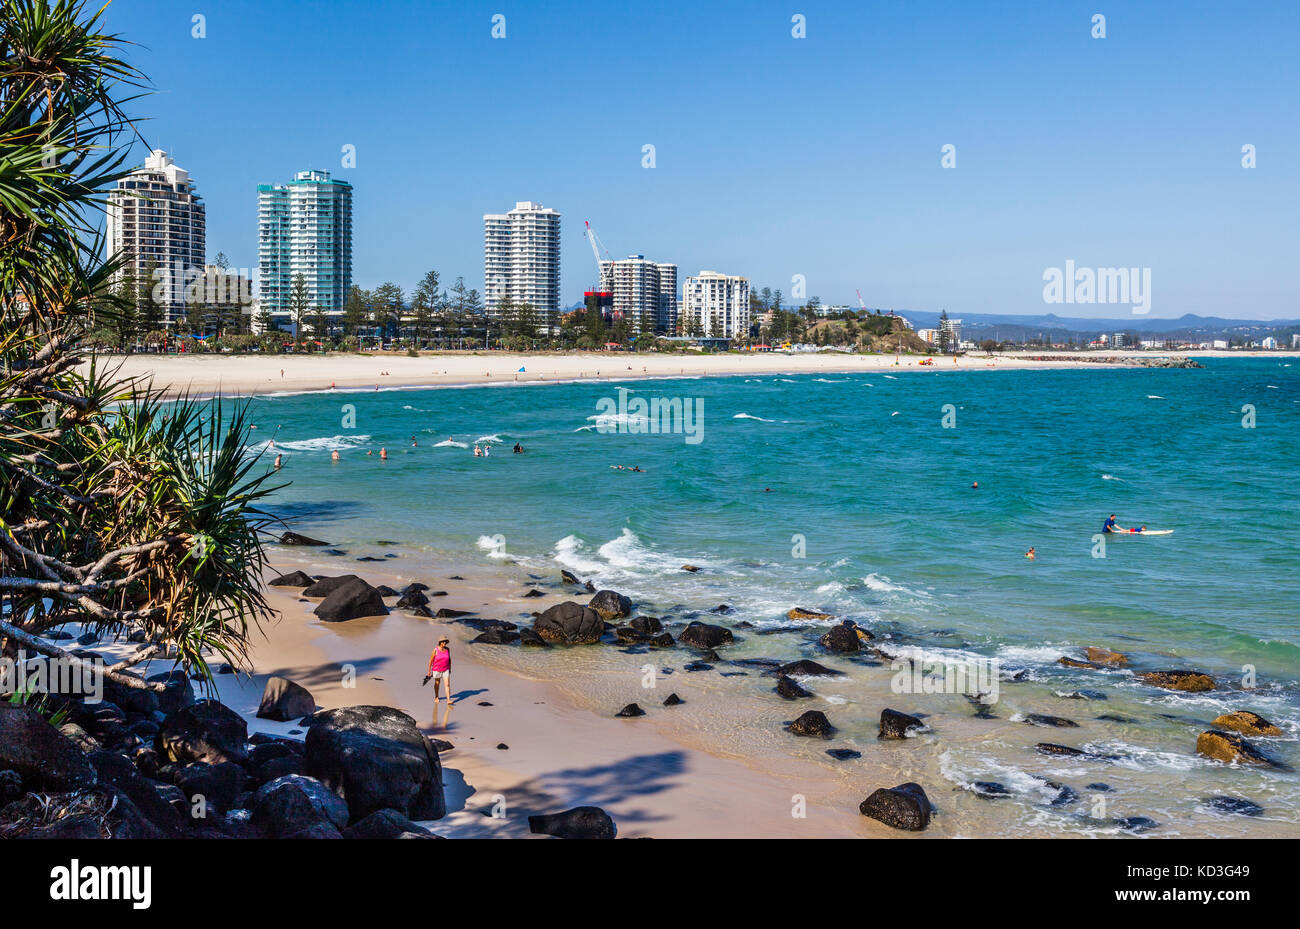 Australia, Queensland, Coolangatta, view of Coolangatta Beach from the Greenmount Point headland Stock Photo